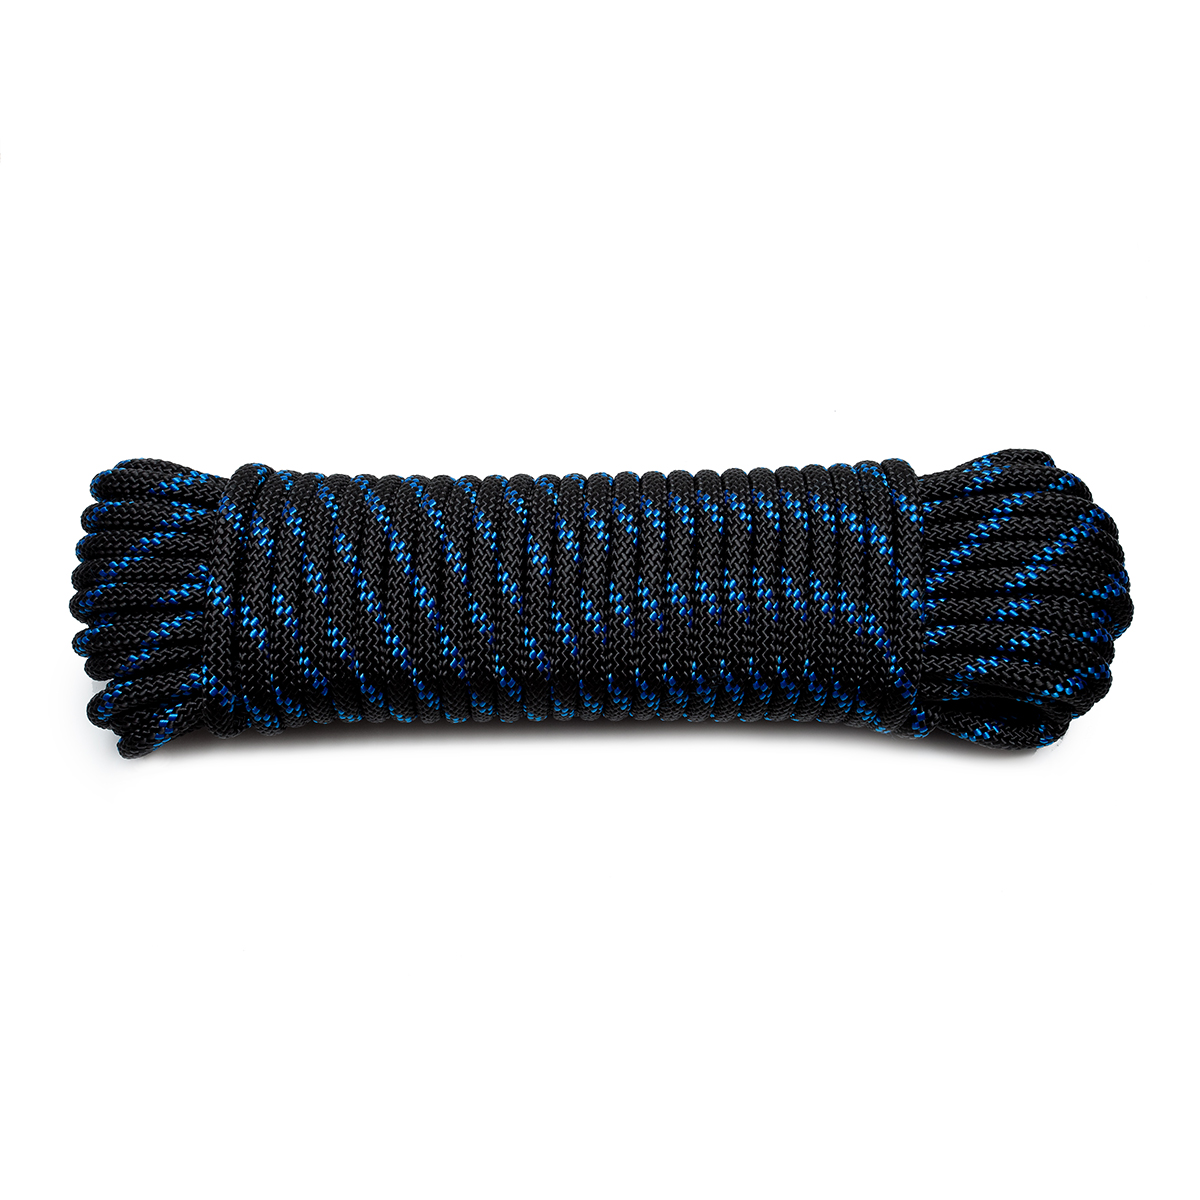 Шнур плетеный якорный Петроканат 10.0 мм, черно-синий, 1100 кг, 45 м